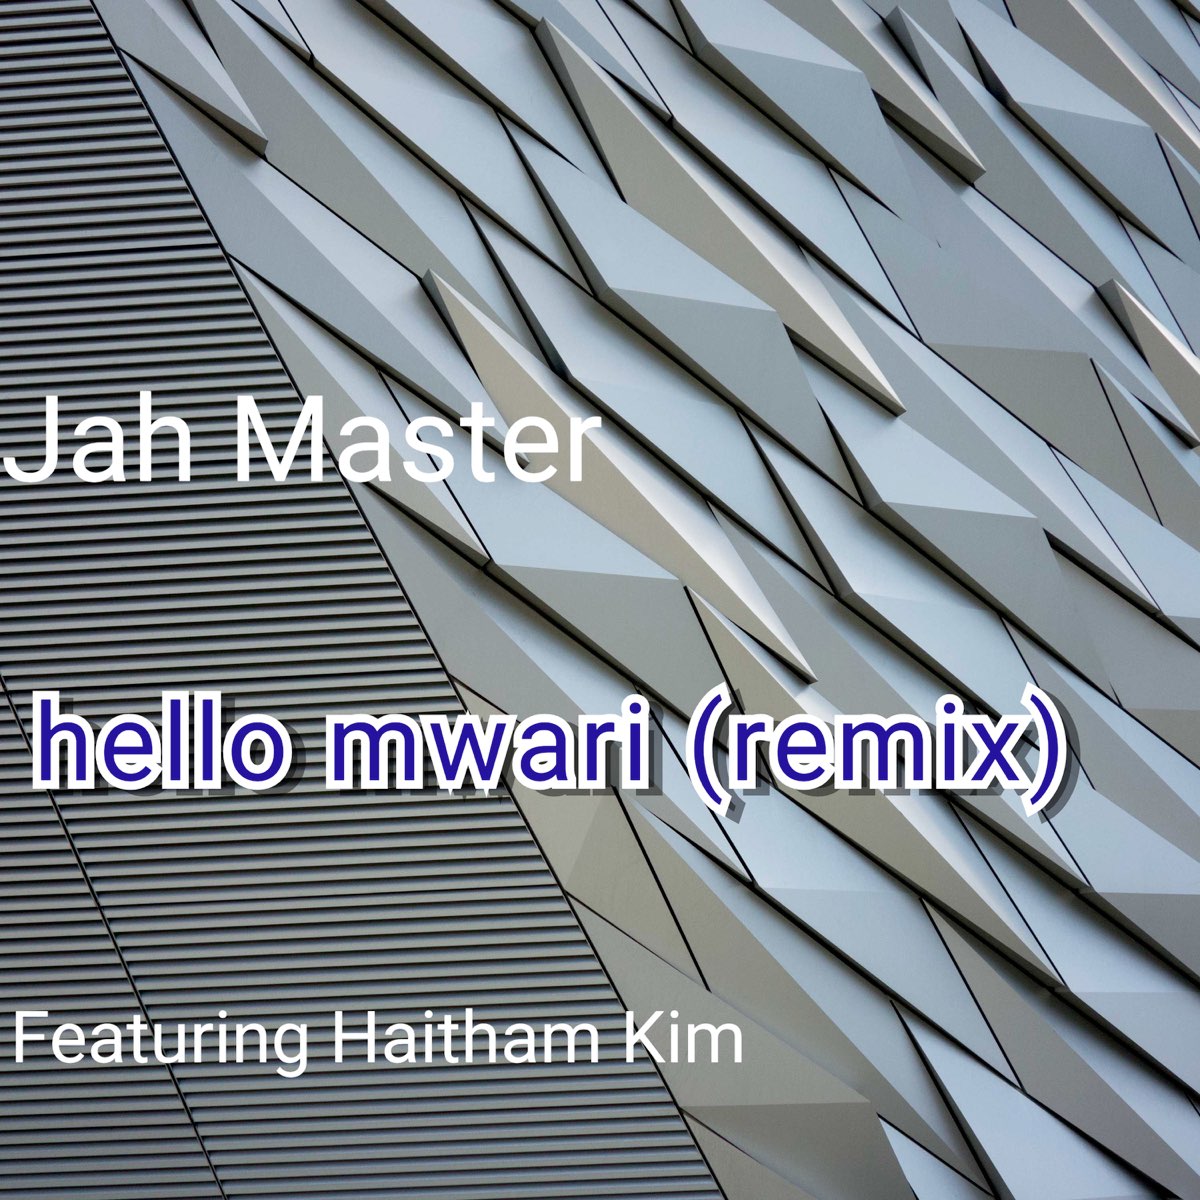 Hello Mwari (Remix) [feat. Haitham Kim] - Single — álbum de Jah Master —  Apple Music